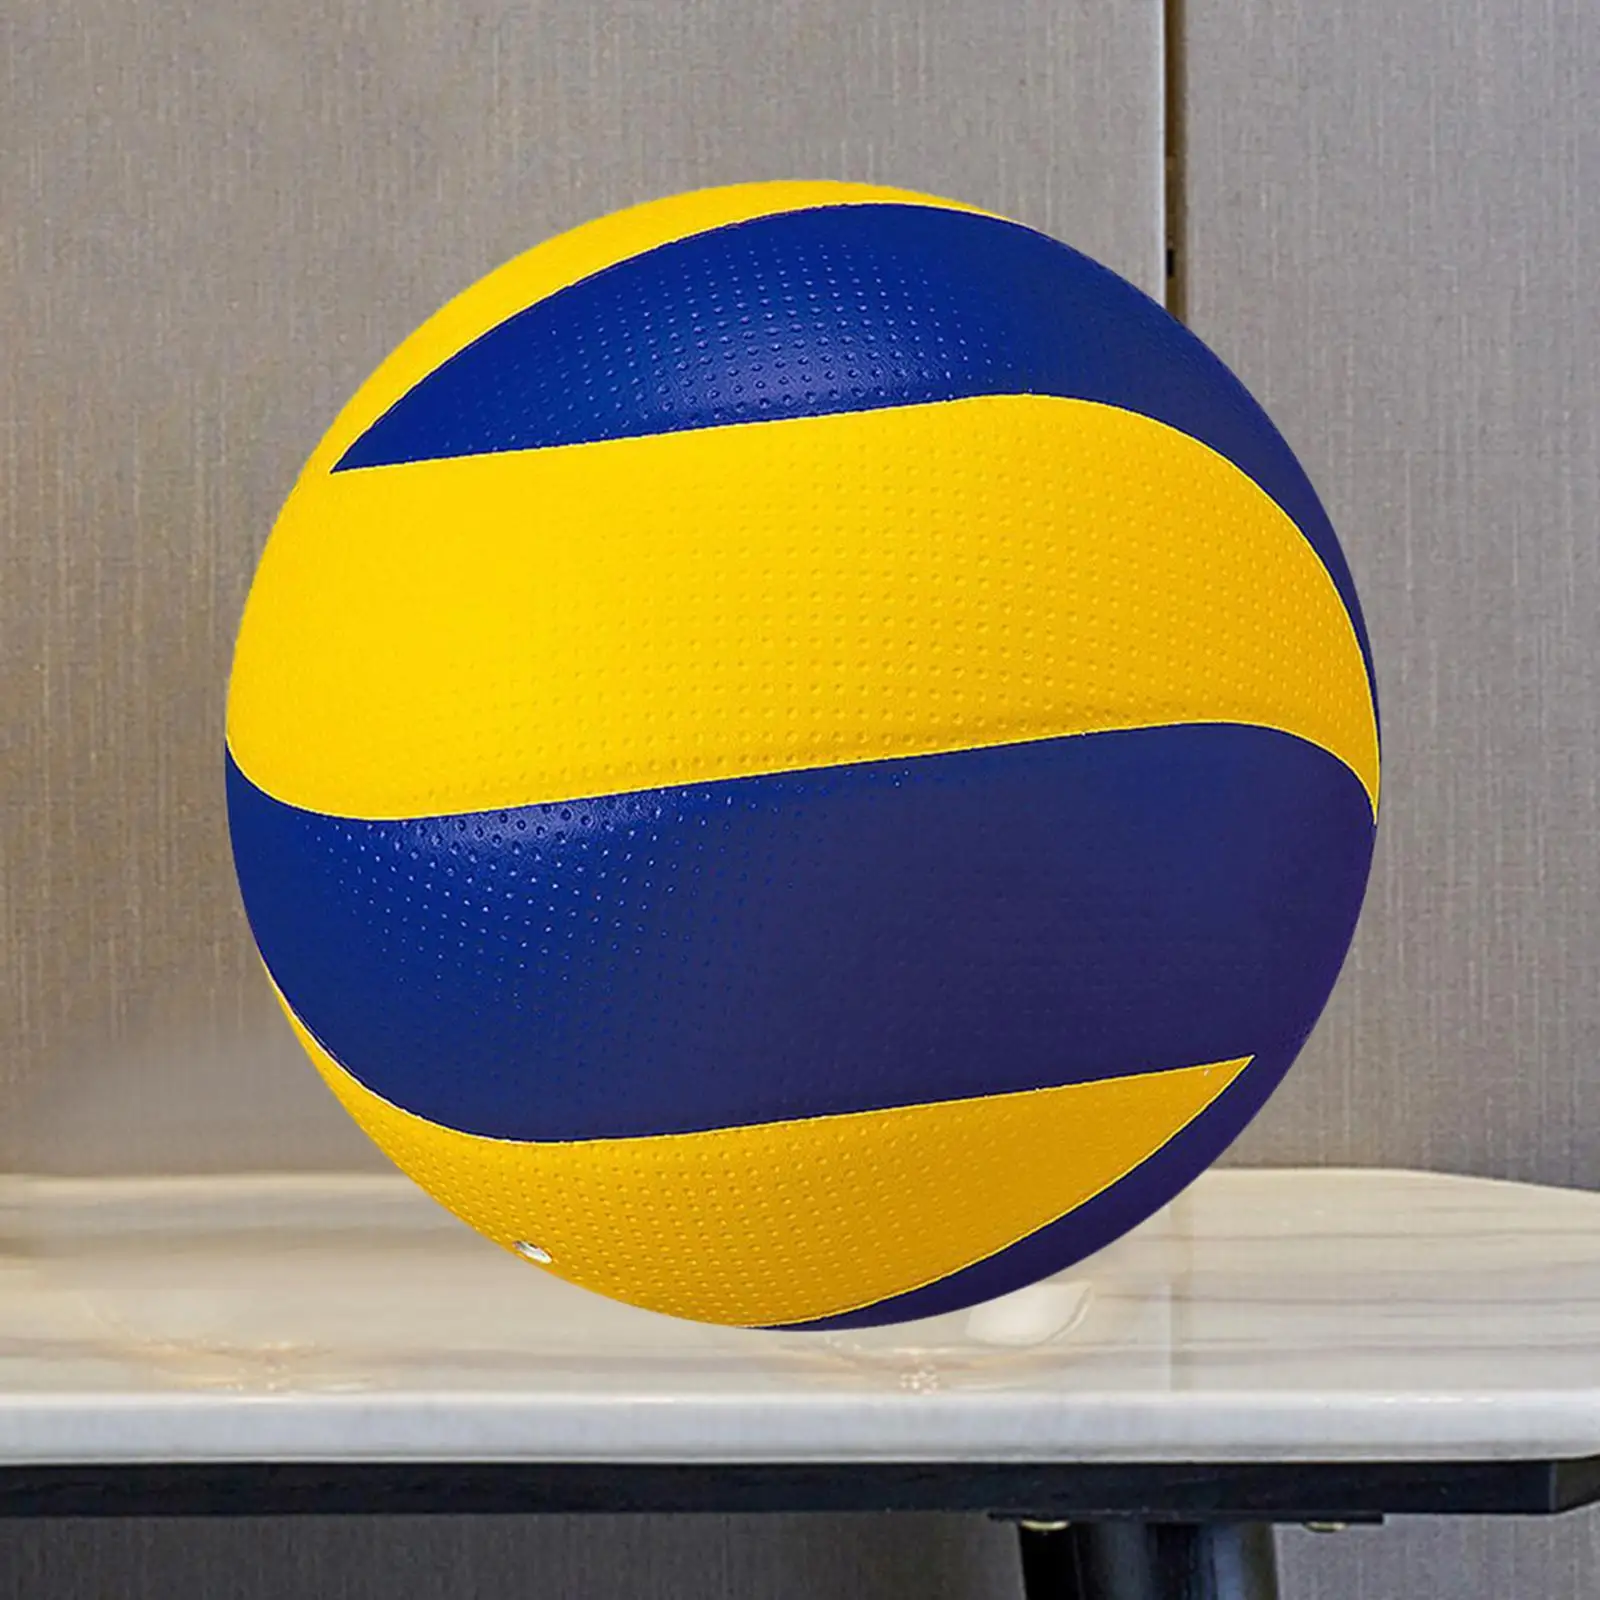 Professional Standard Beach Volleyball Indoor Outdoor Ball Pool Gym Equipment